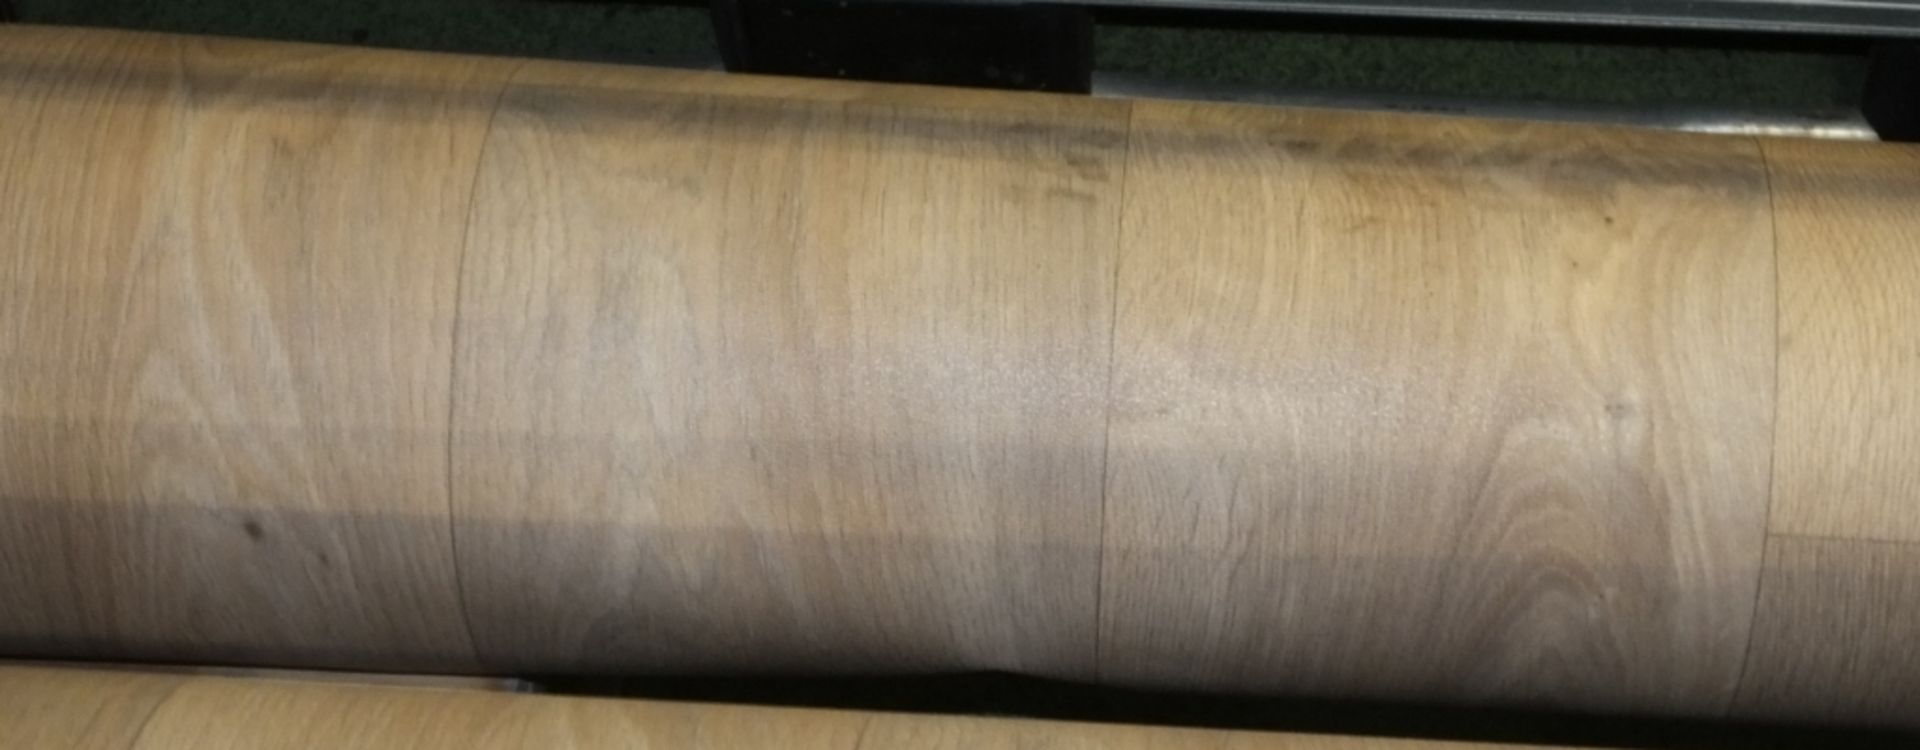 Wood Effect Vinyl Flooring - Approx 4M x 8M - Image 2 of 2